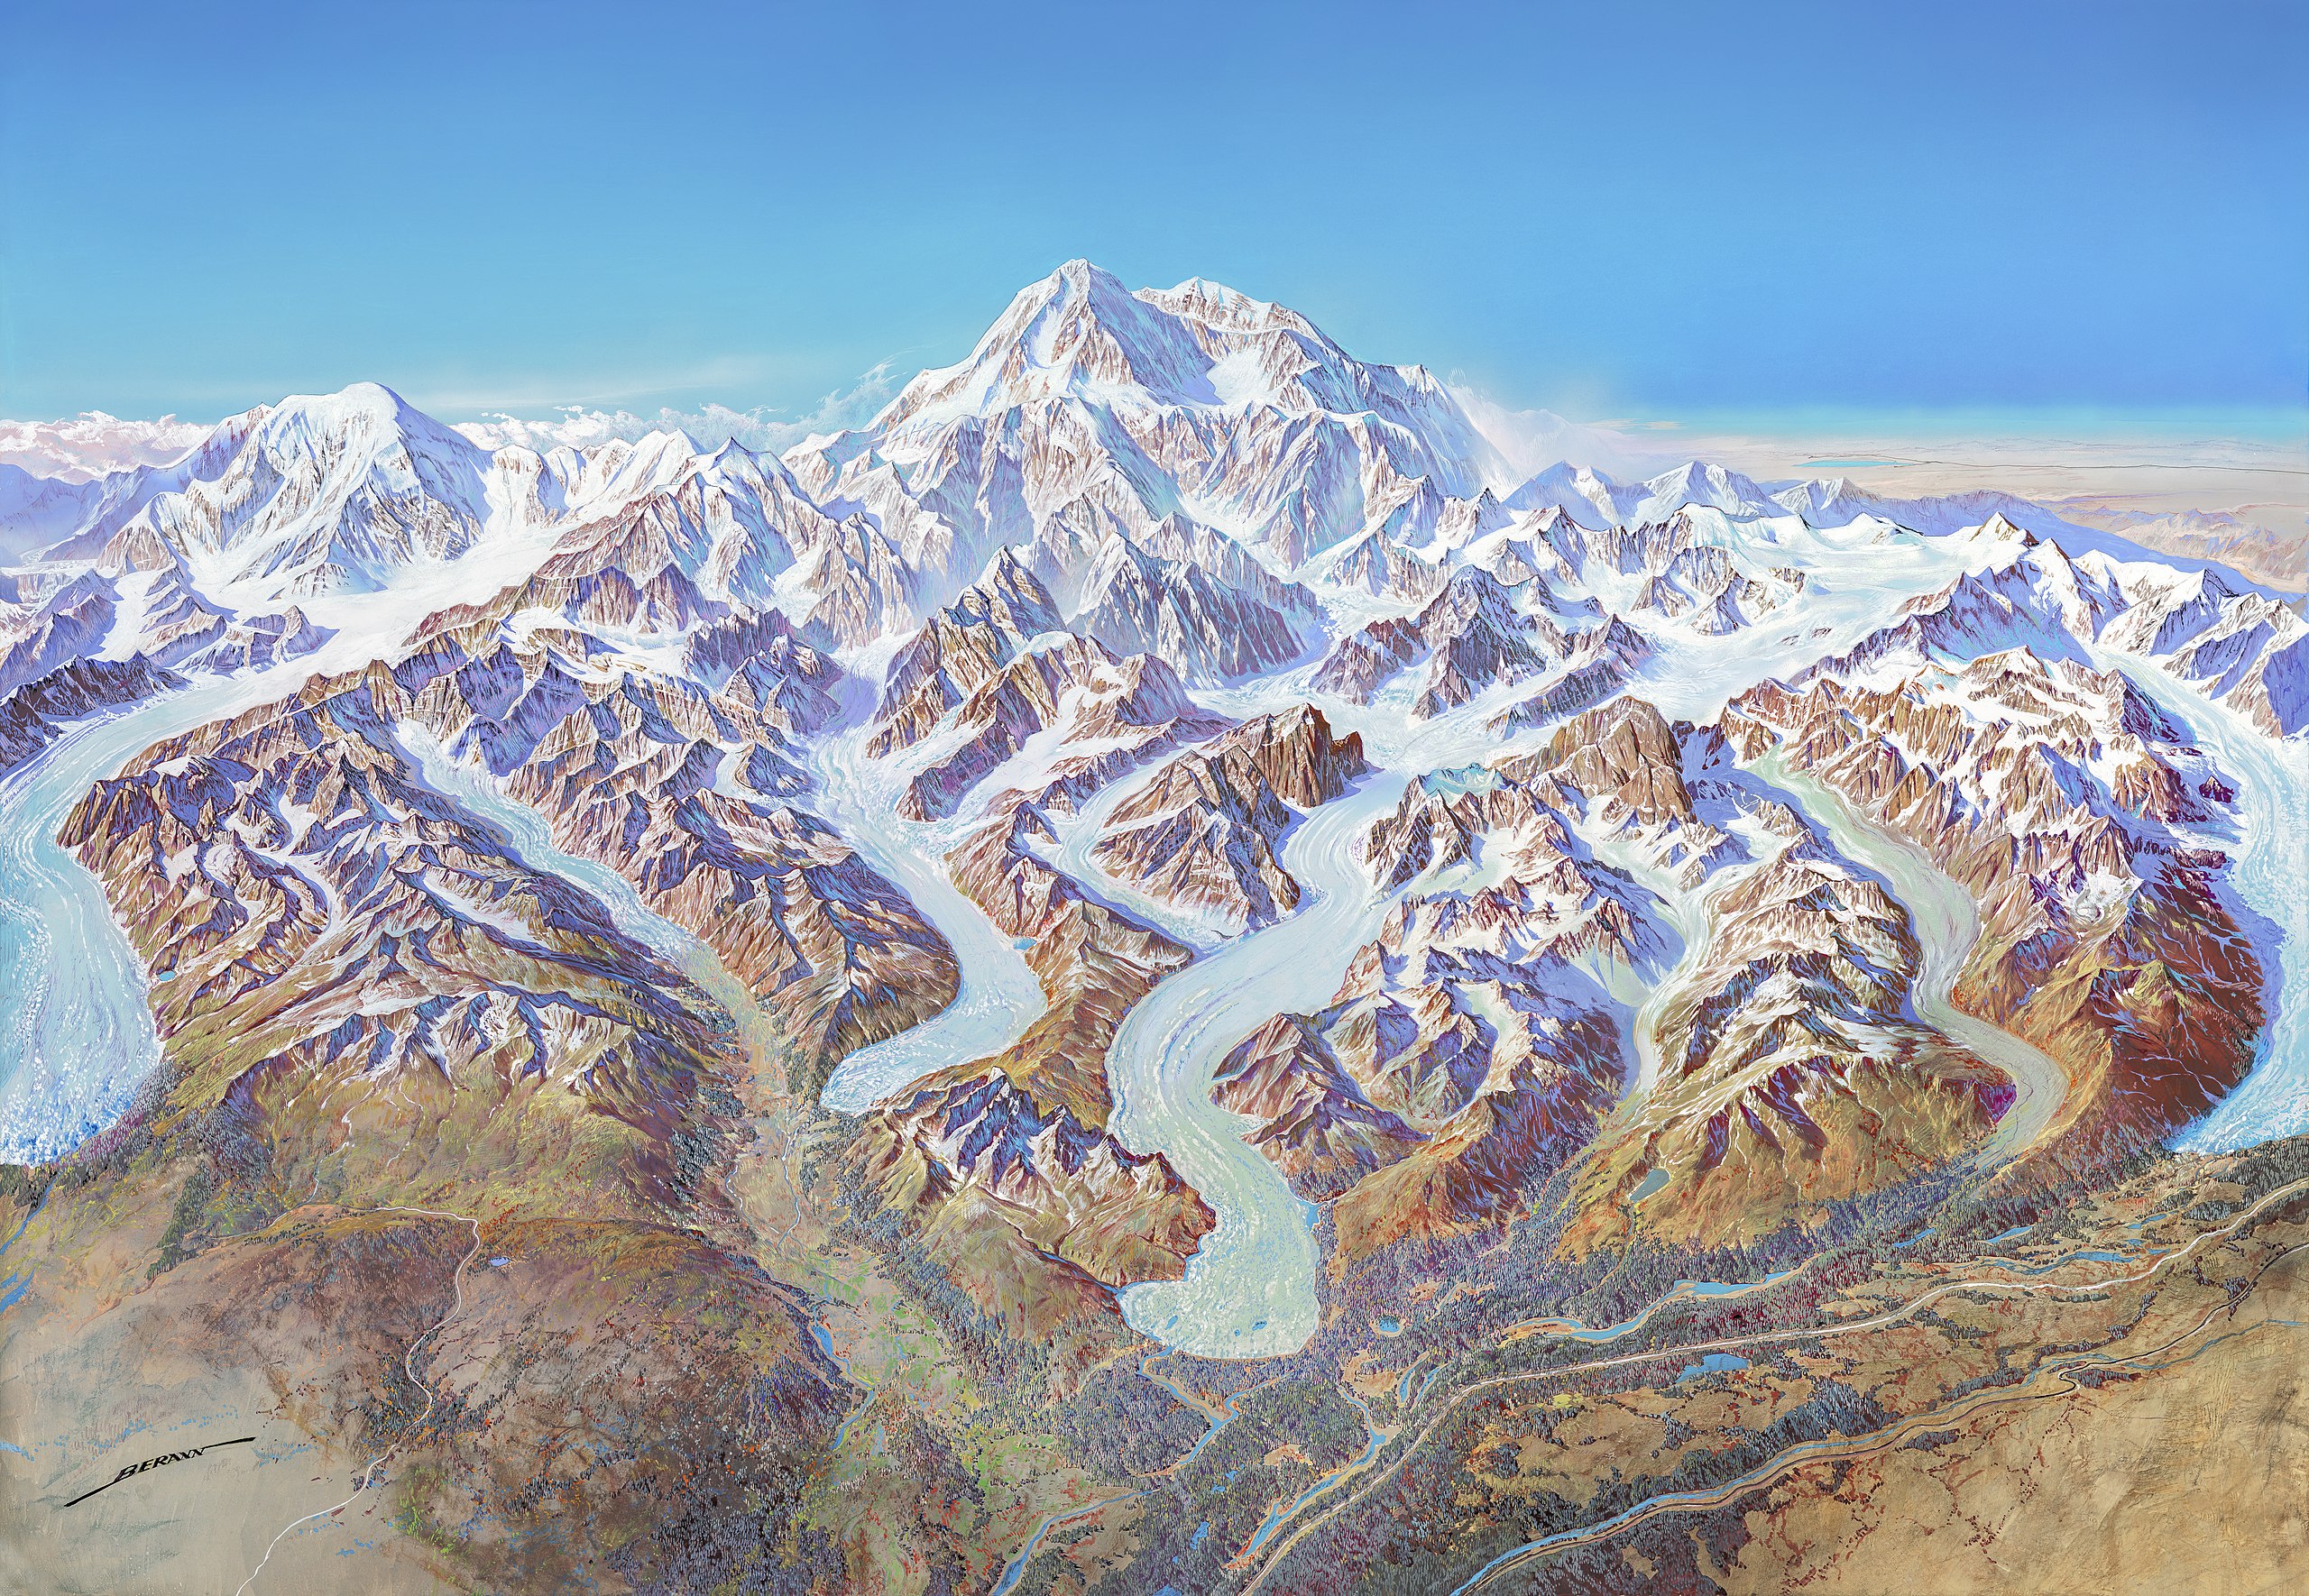 File:Heinrich Berann NPS Panorama of Denali without labels.jpg - Wikipedia